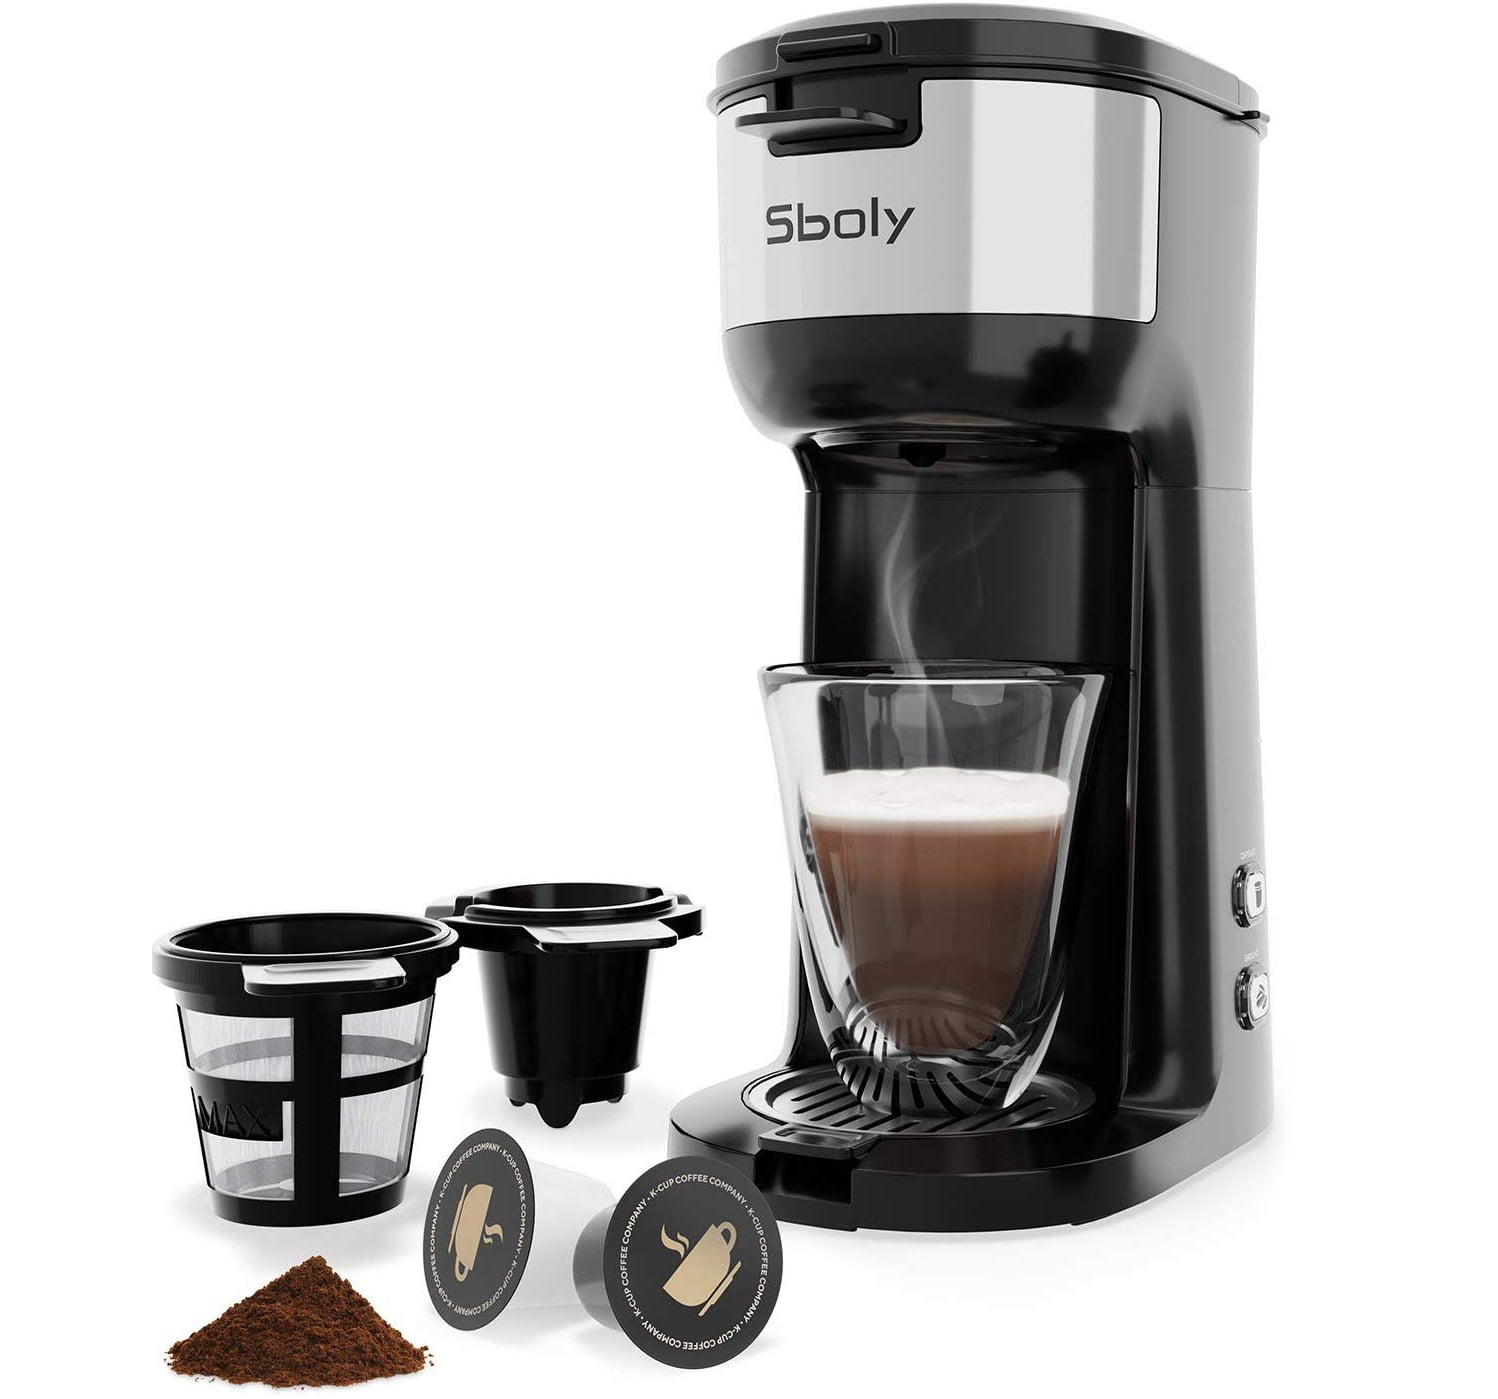 Sboly Single Serve Coffee Maker Brewer for KCup Pod